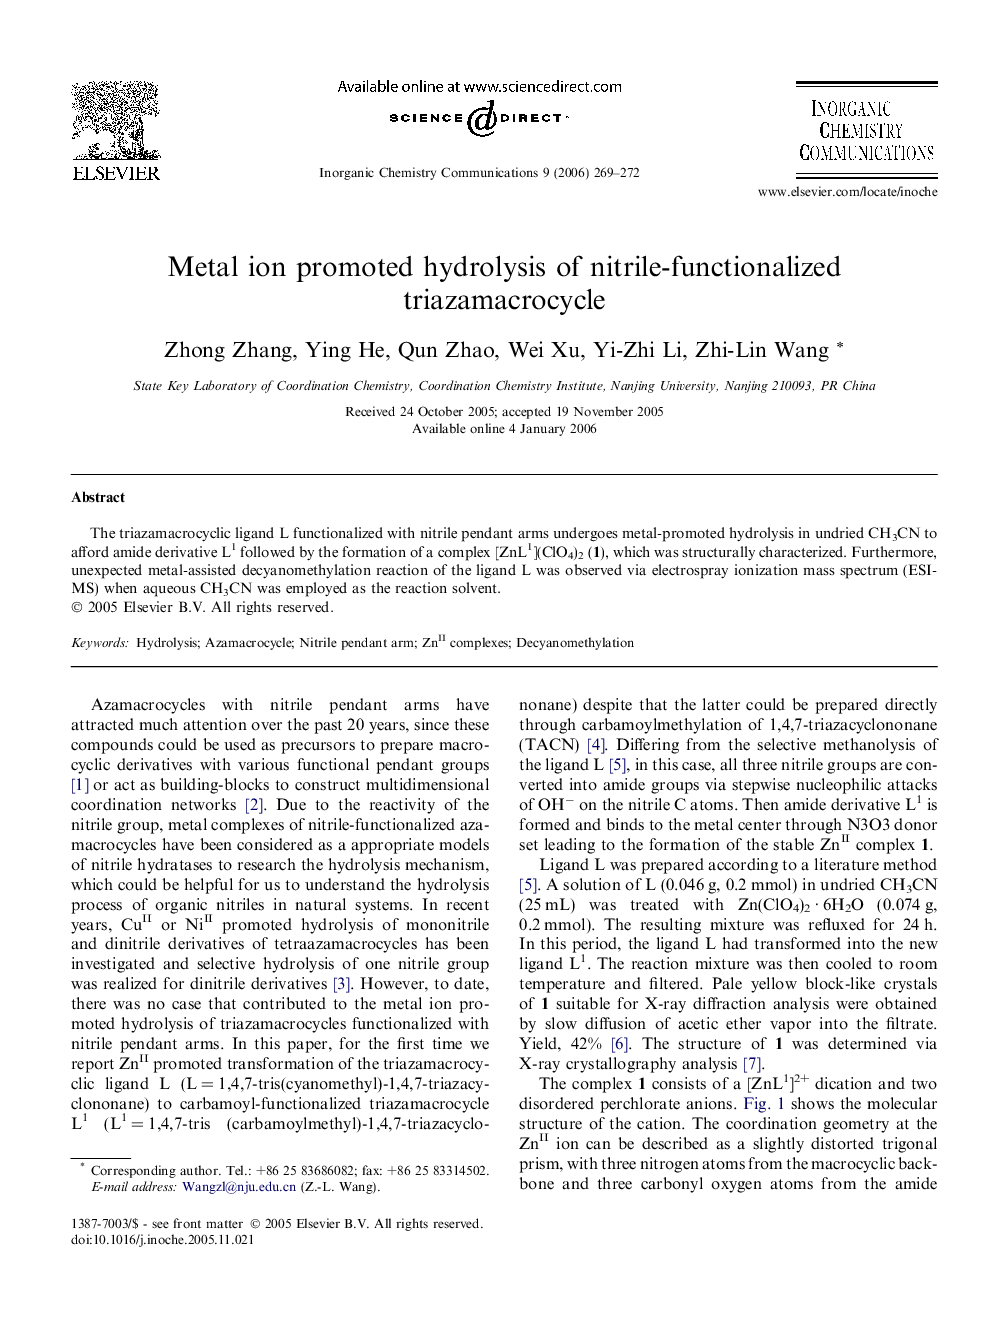 Metal ion promoted hydrolysis of nitrile-functionalized triazamacrocycle